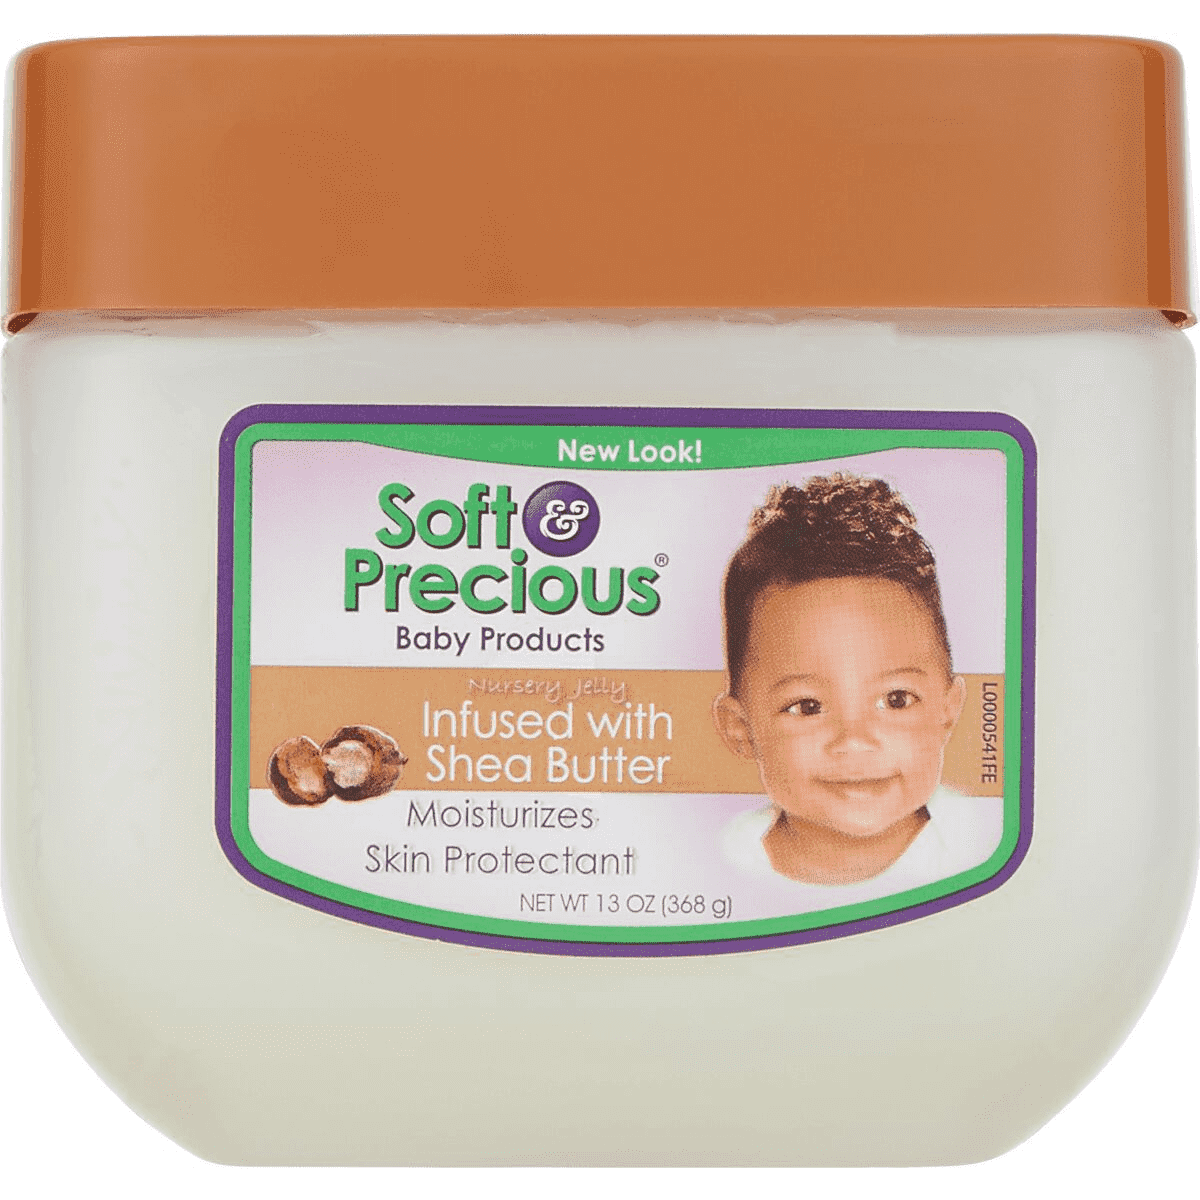 Soft & Precious - Nursery Jelly with Shea Butter